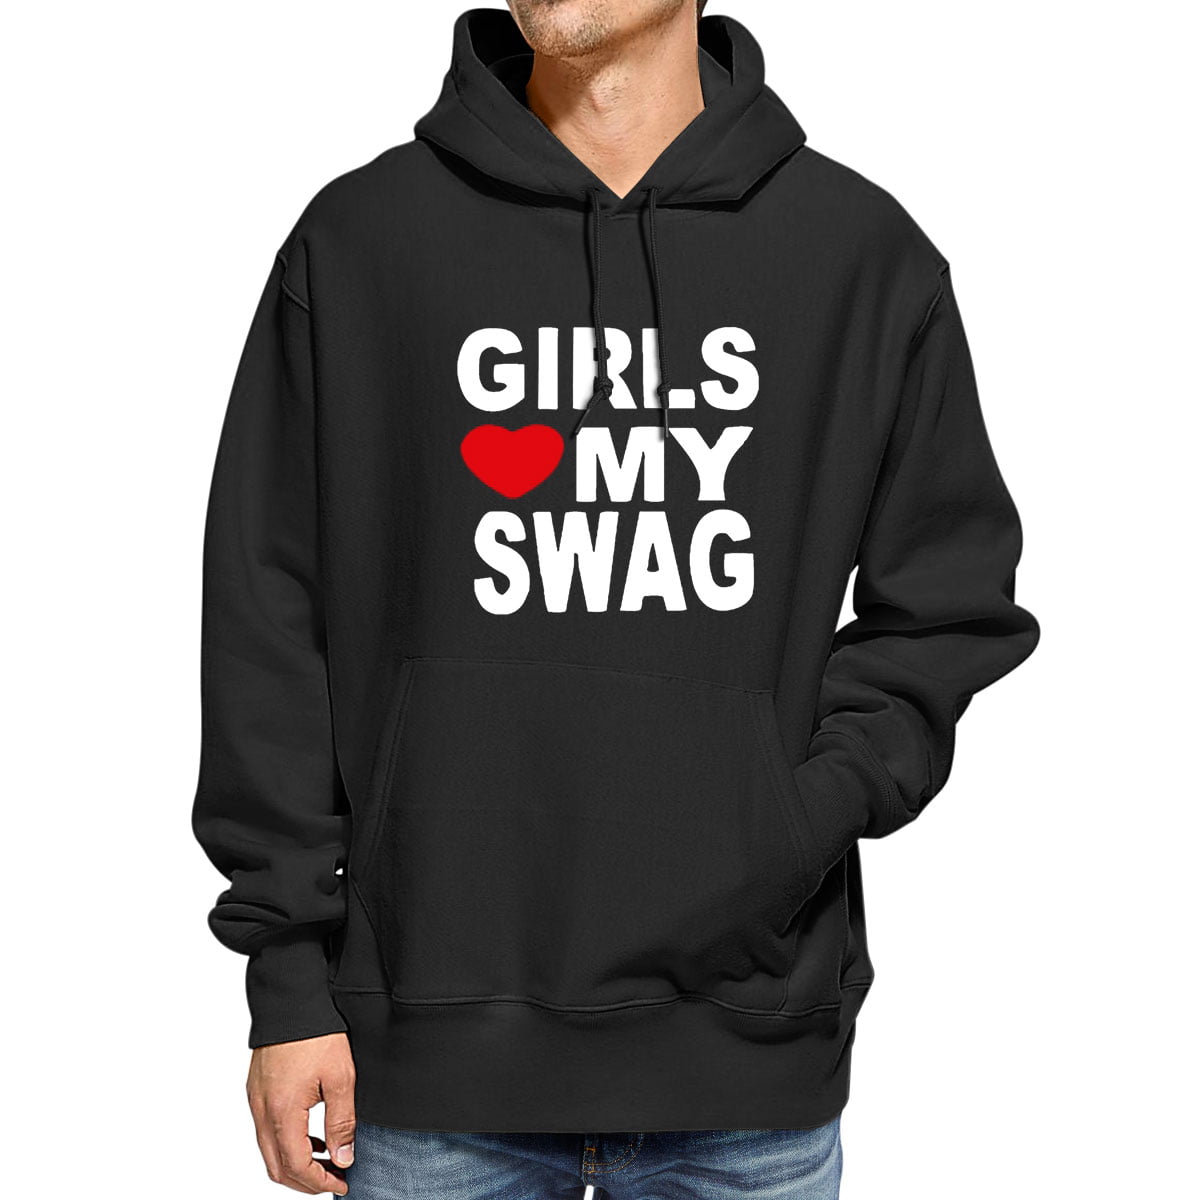 Unisex Cool Swagg Jumper Team Jesus Black and Grey Sweatshirt 